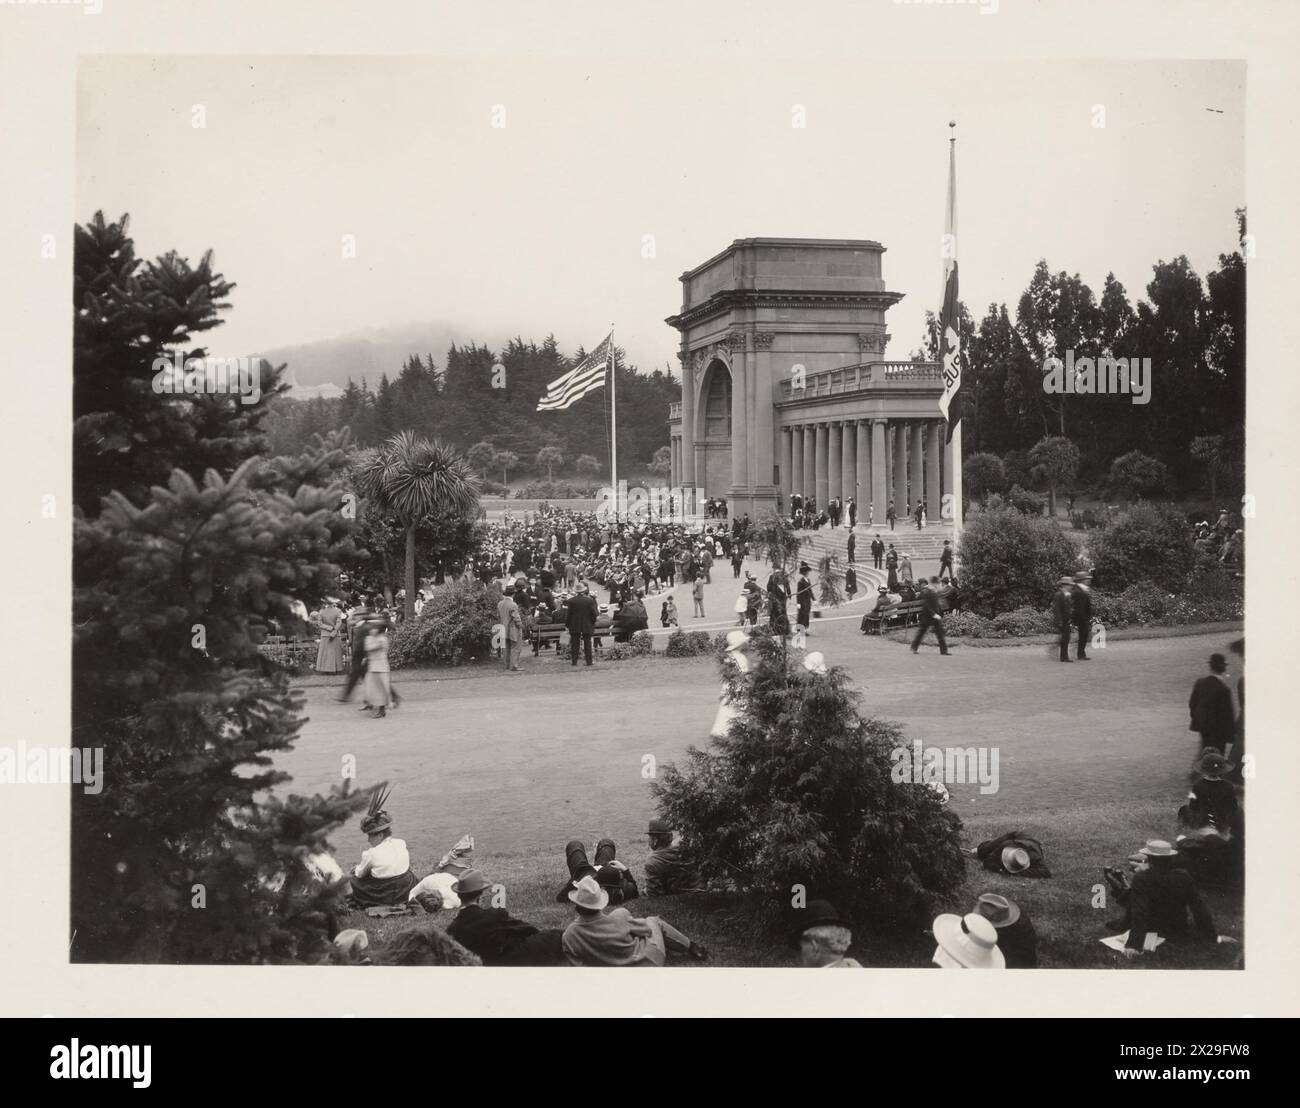 Spreckels Temple of Music and Music Concourse . Vintage Photograph of Golden Gate Park, San Francisco, California, Circa 1920 Stock Photo